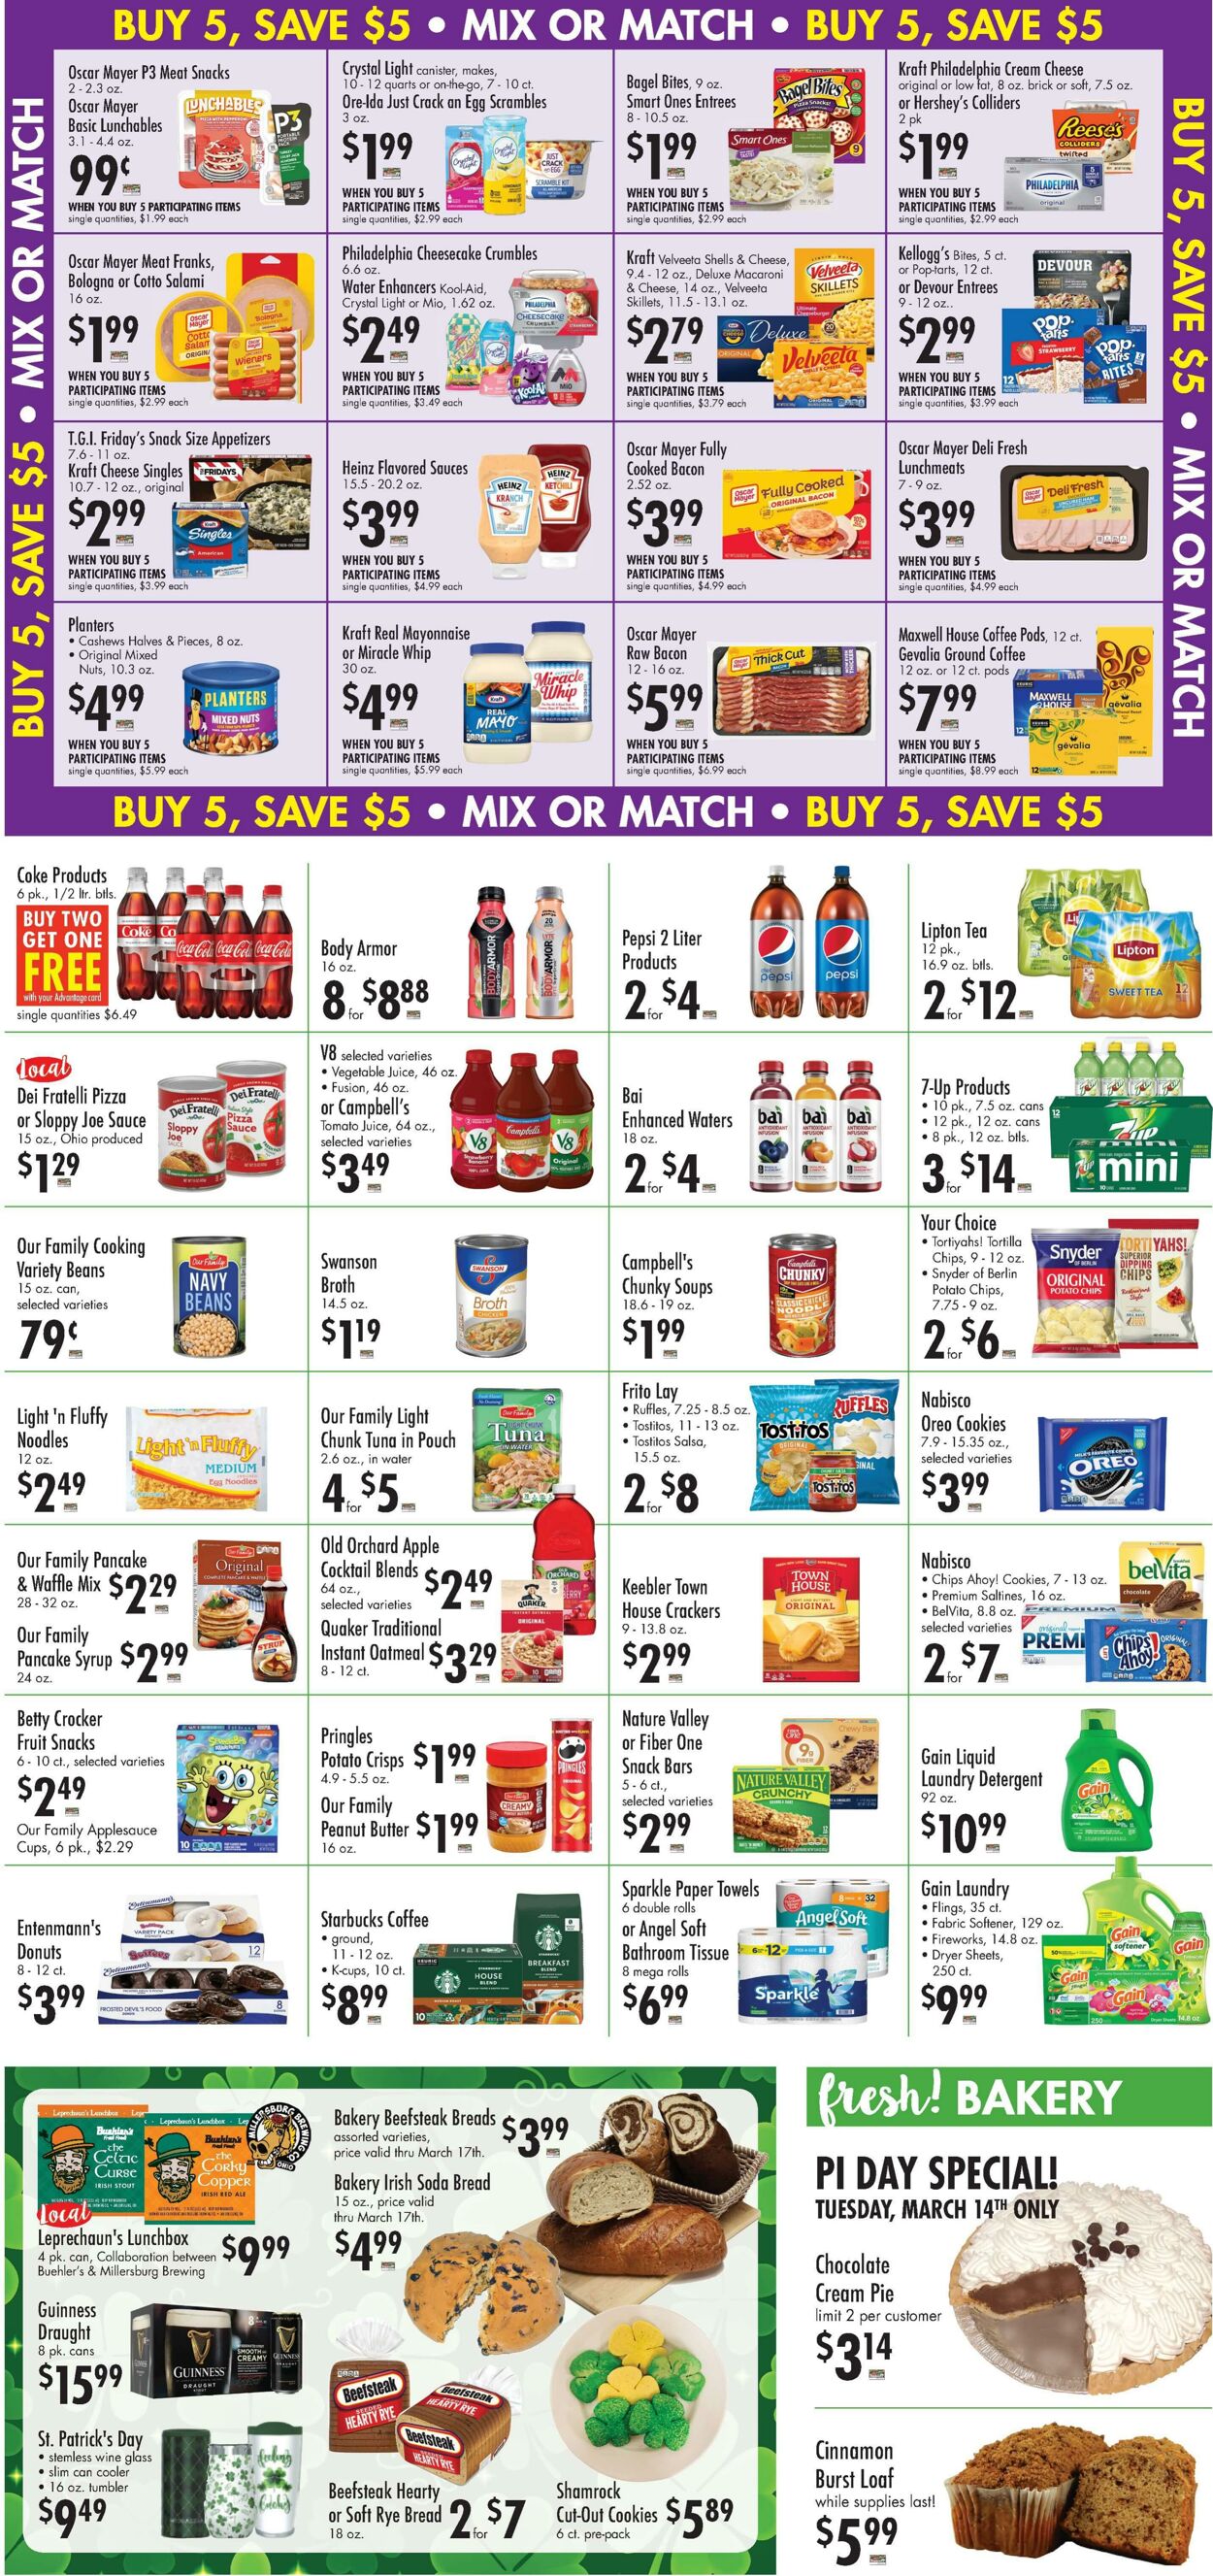 Weekly ad Buehler's Fresh Food 03/08/2023 - 03/14/2023